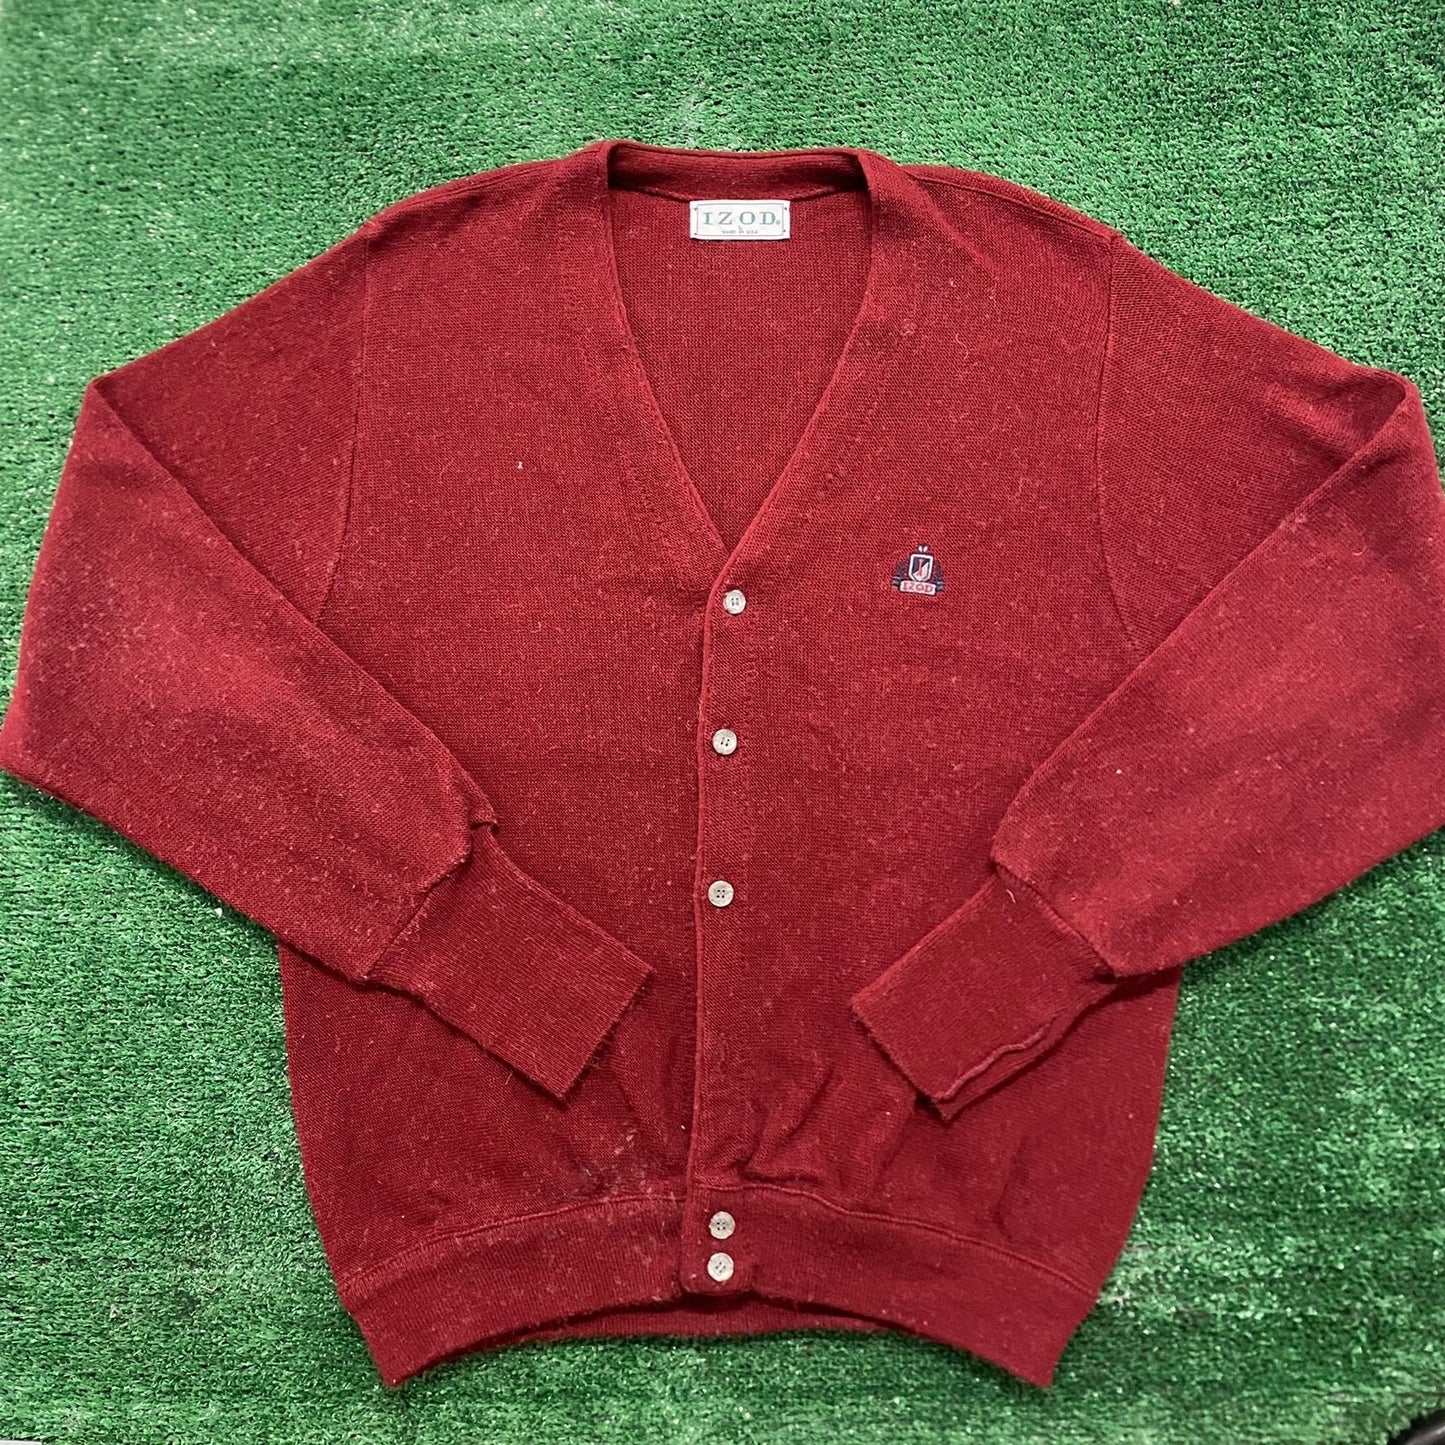 Vintage 80s IZOD Cardigan Essential Preppy Knit Sweater